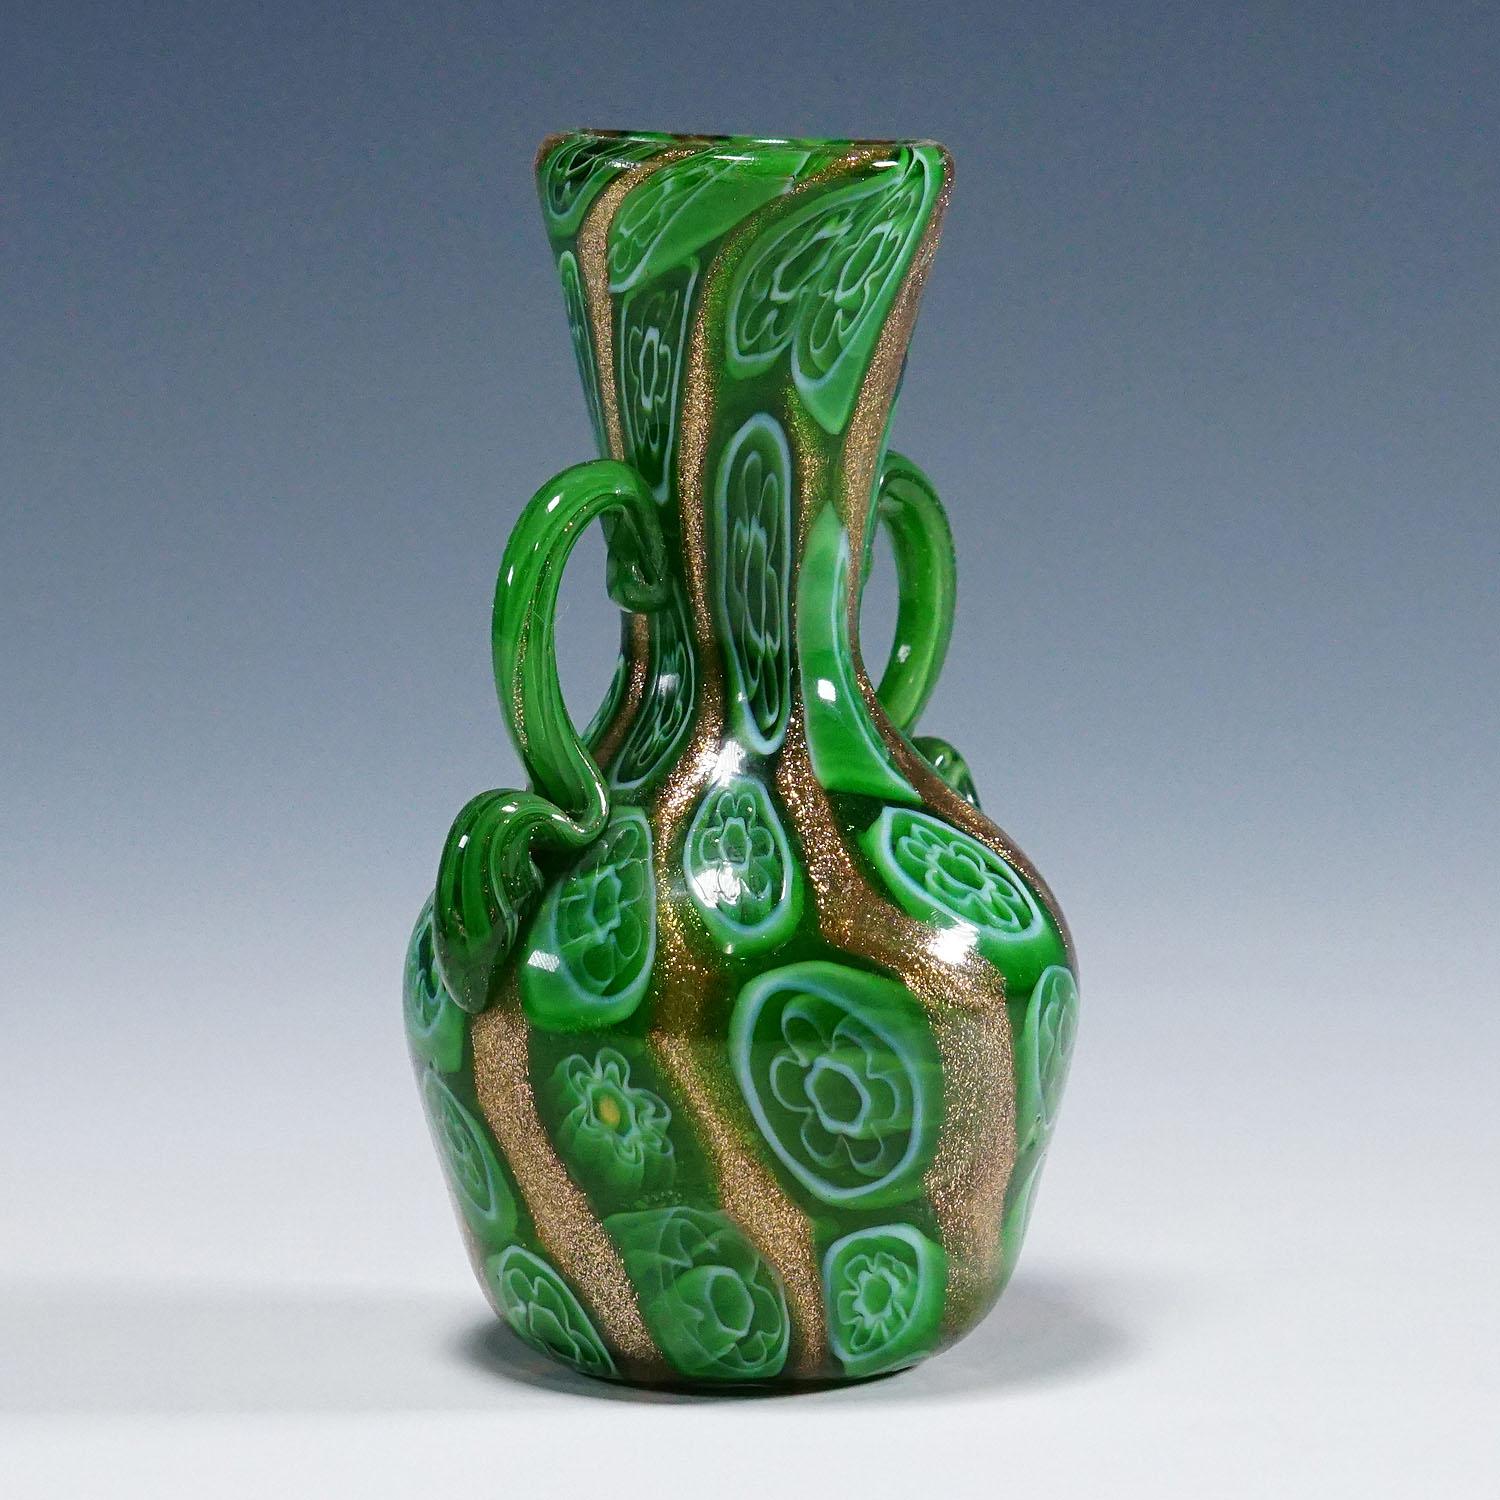 Hand-Crafted Antique Murrine Vase with Aventurine, Fratelli Toso Murano ca. 1920s